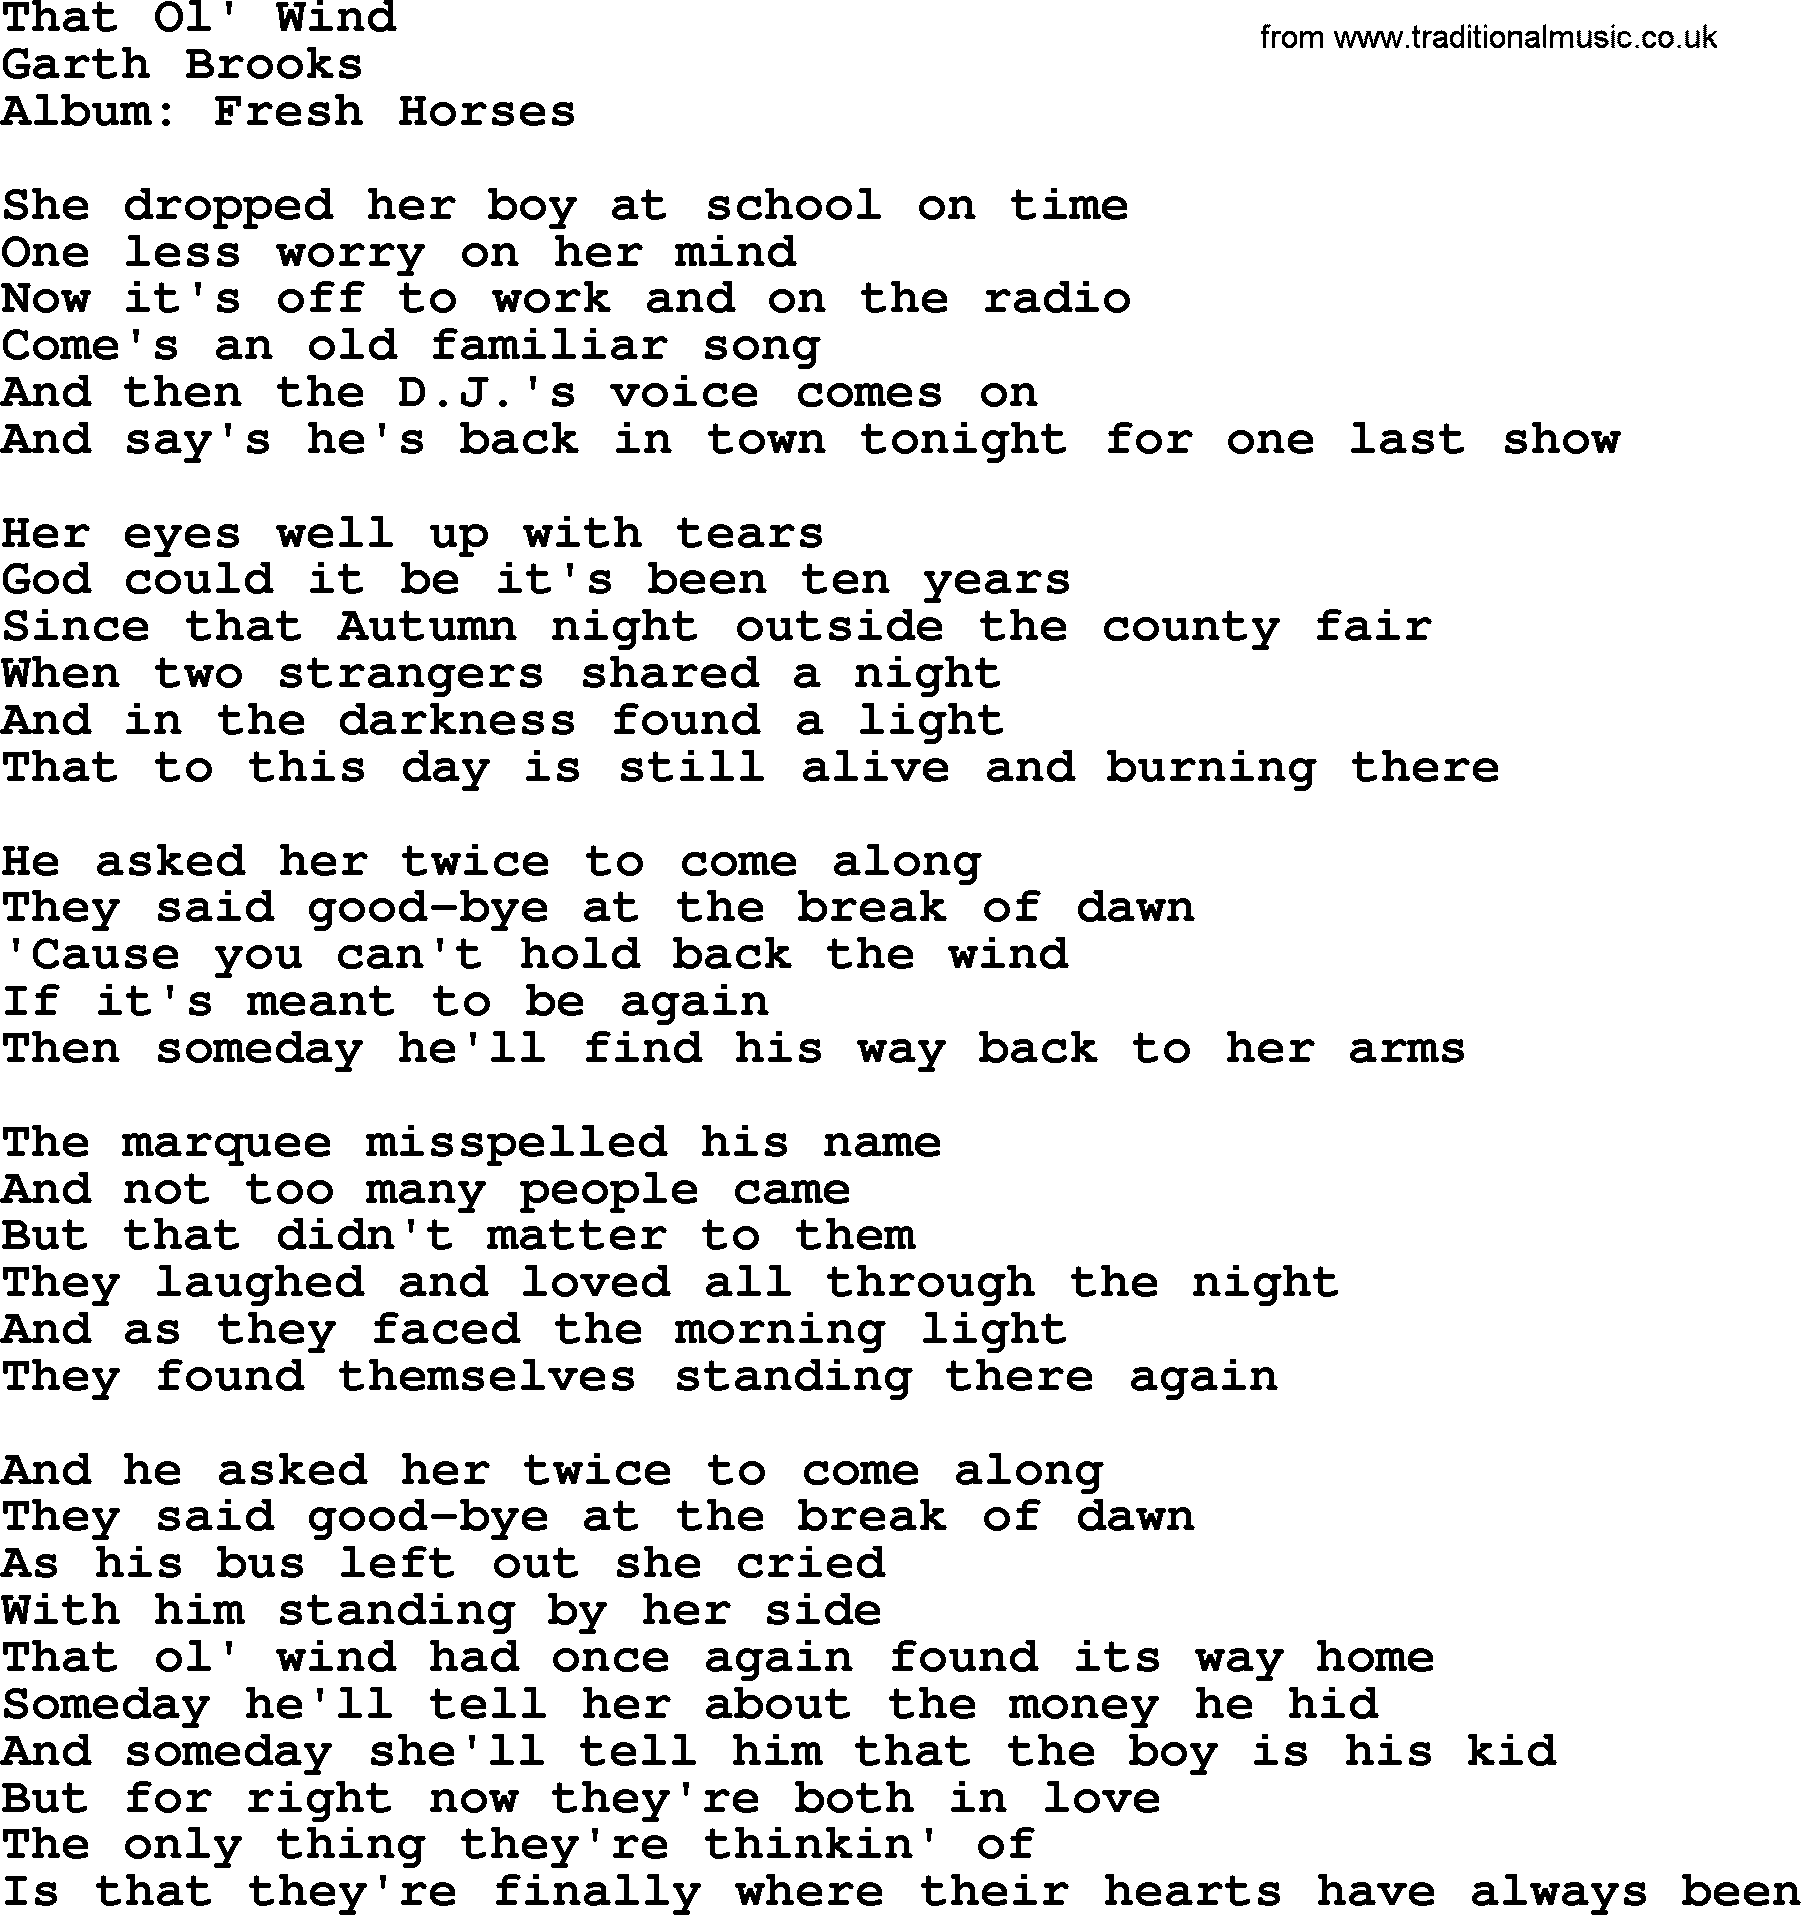 Garth Brooks song: That Ol' Wind, lyrics